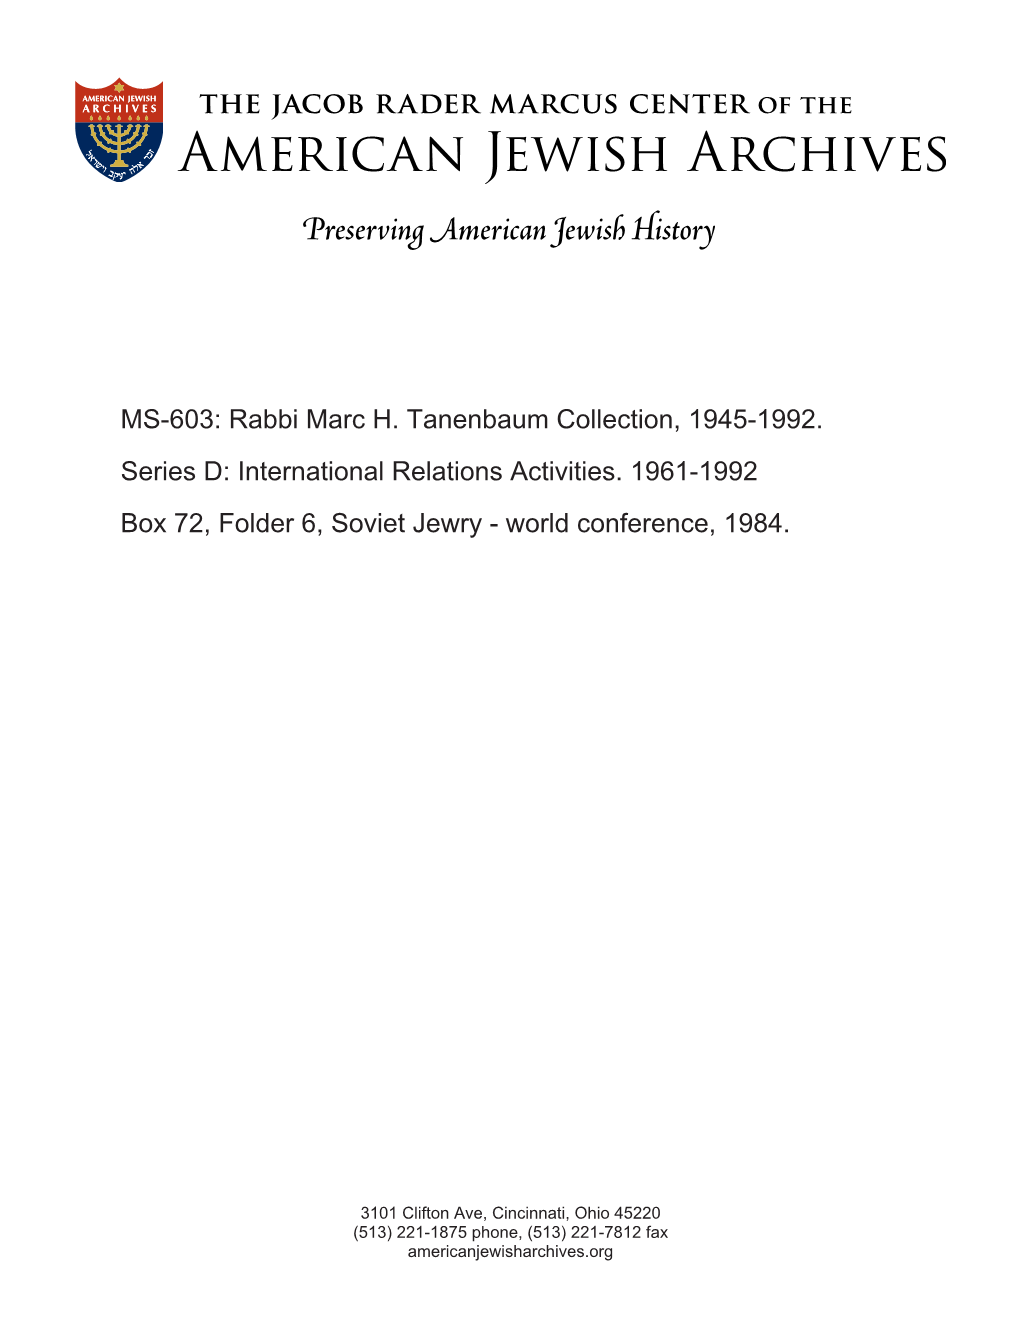 MS-603: Rabbi Marc H. Tanenbaum Collection, 1945-1992. Series D: International Relations Activities. 1961-1992 Box 72, Folder 6, Soviet Jewry - World Conference, 1984